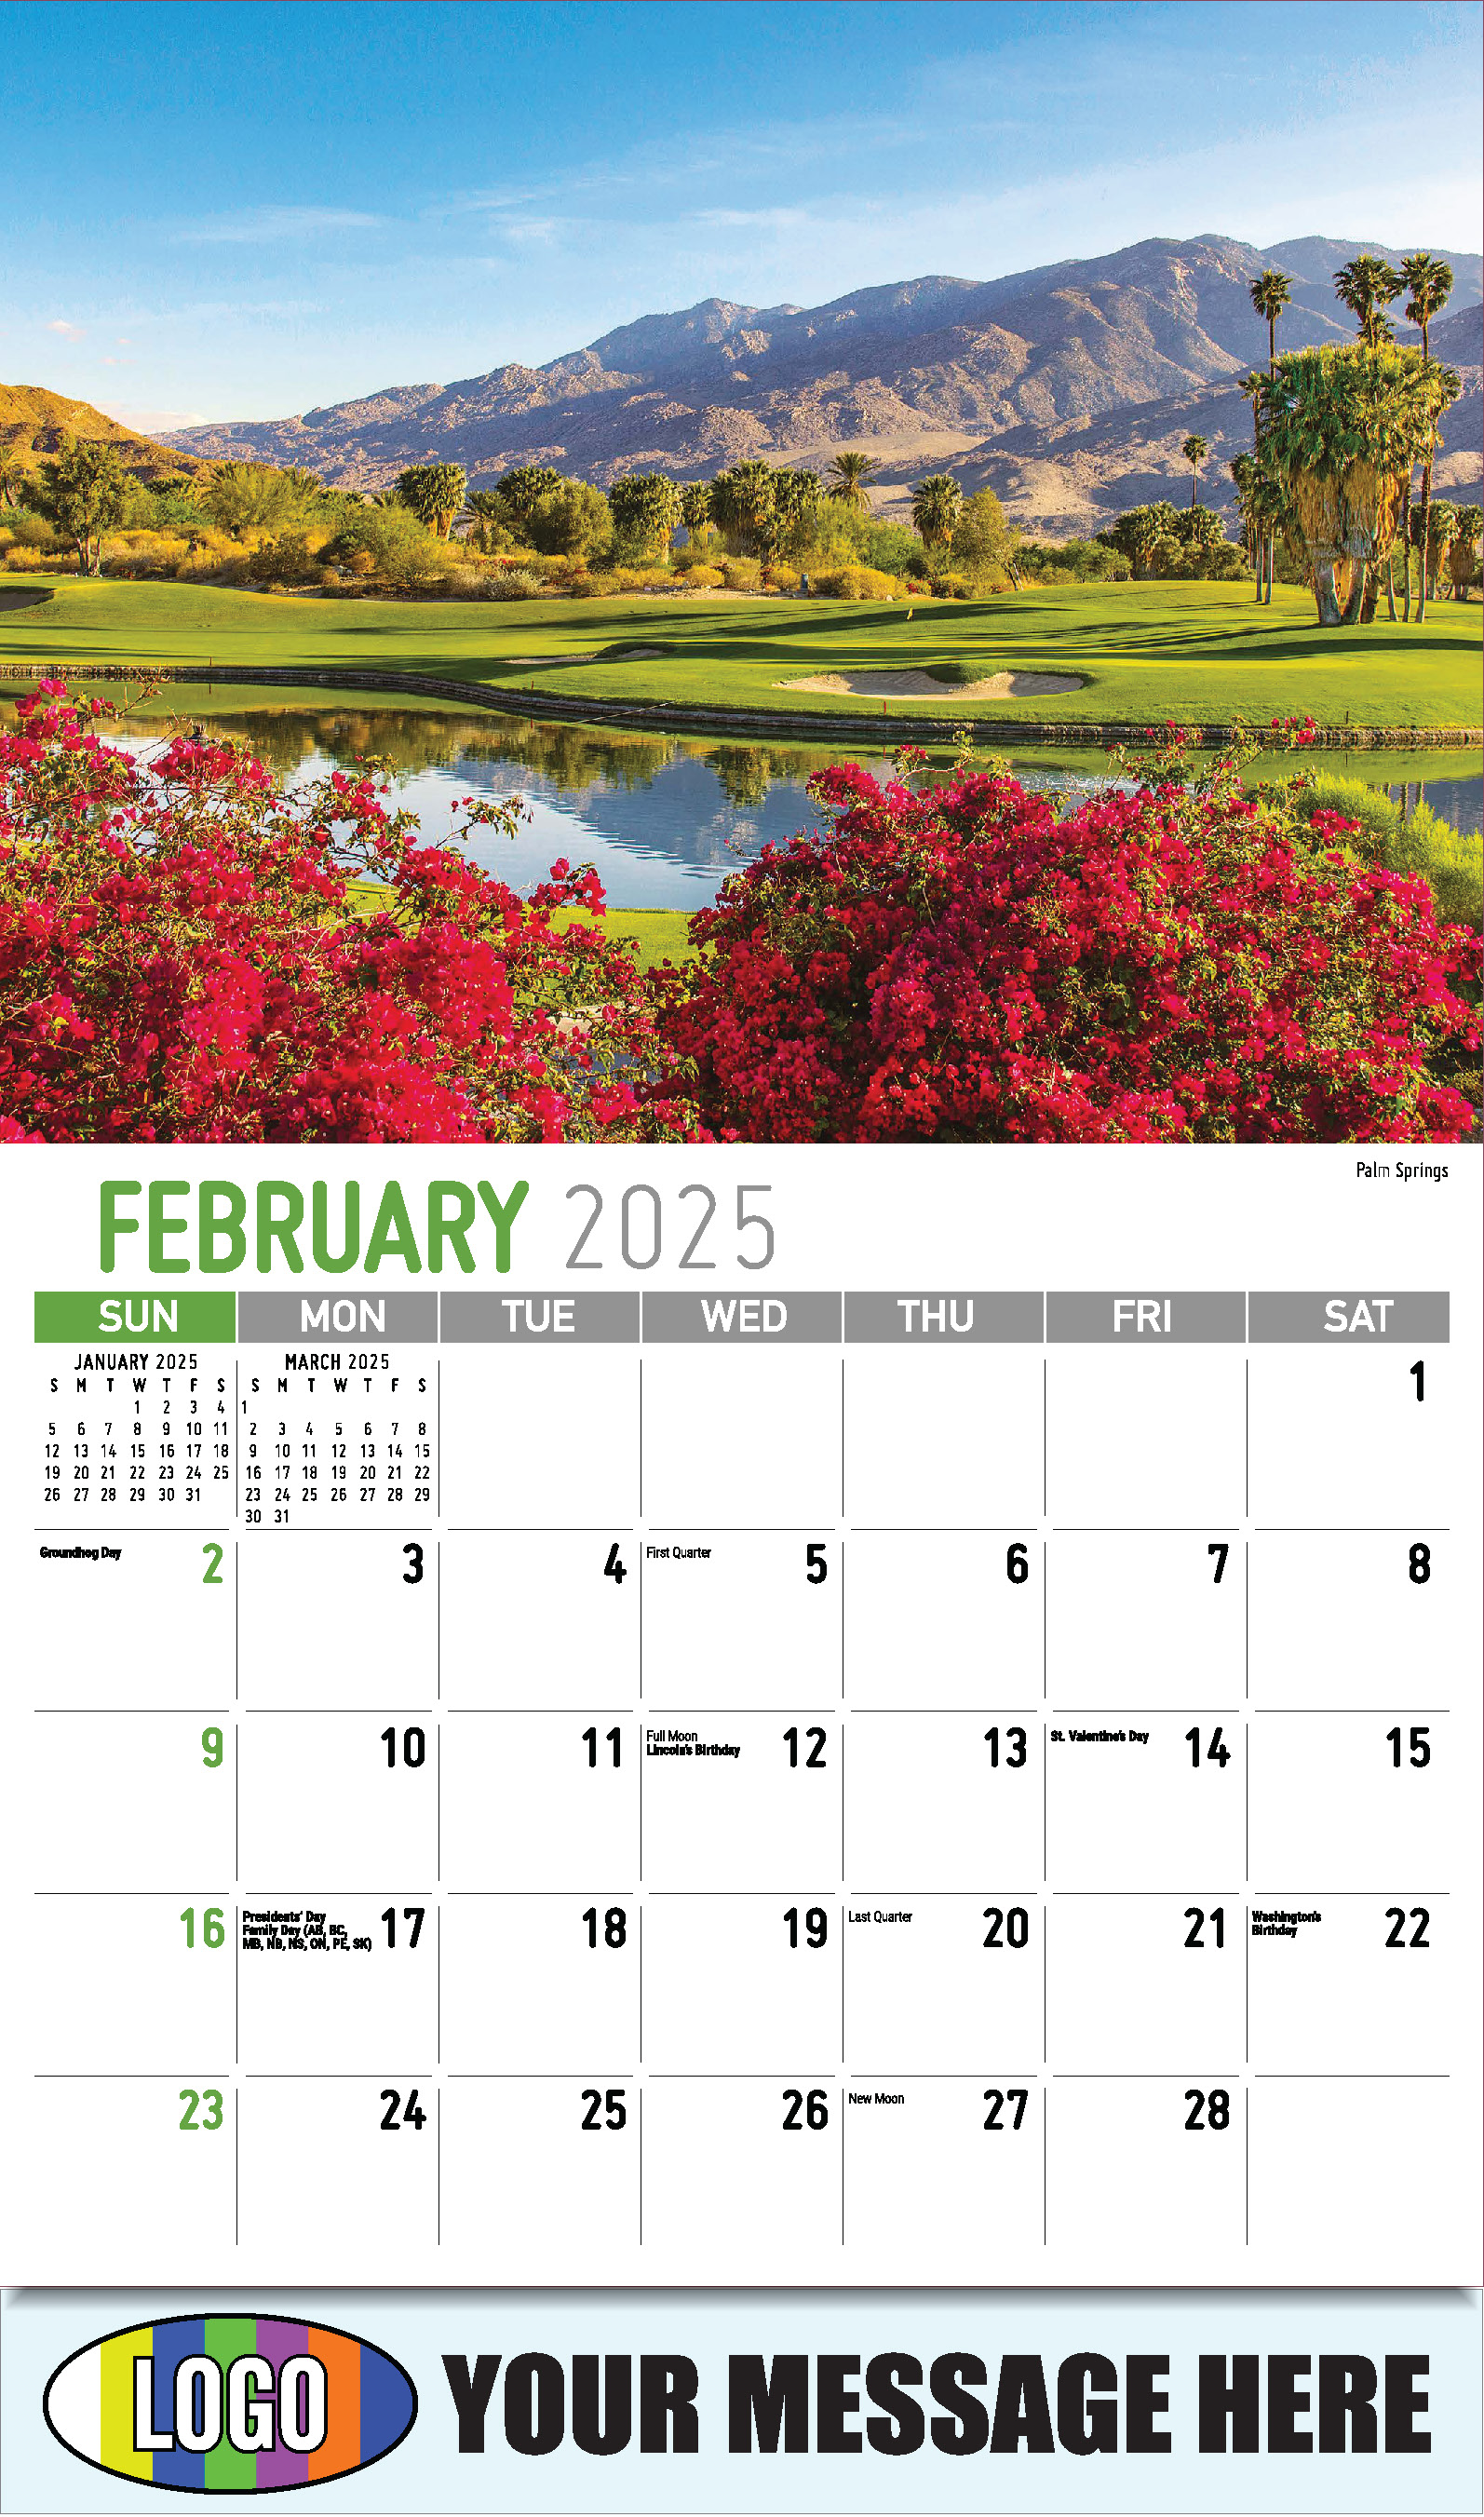 Scenes of California 2025 Business Advertising Wall Calendar - February